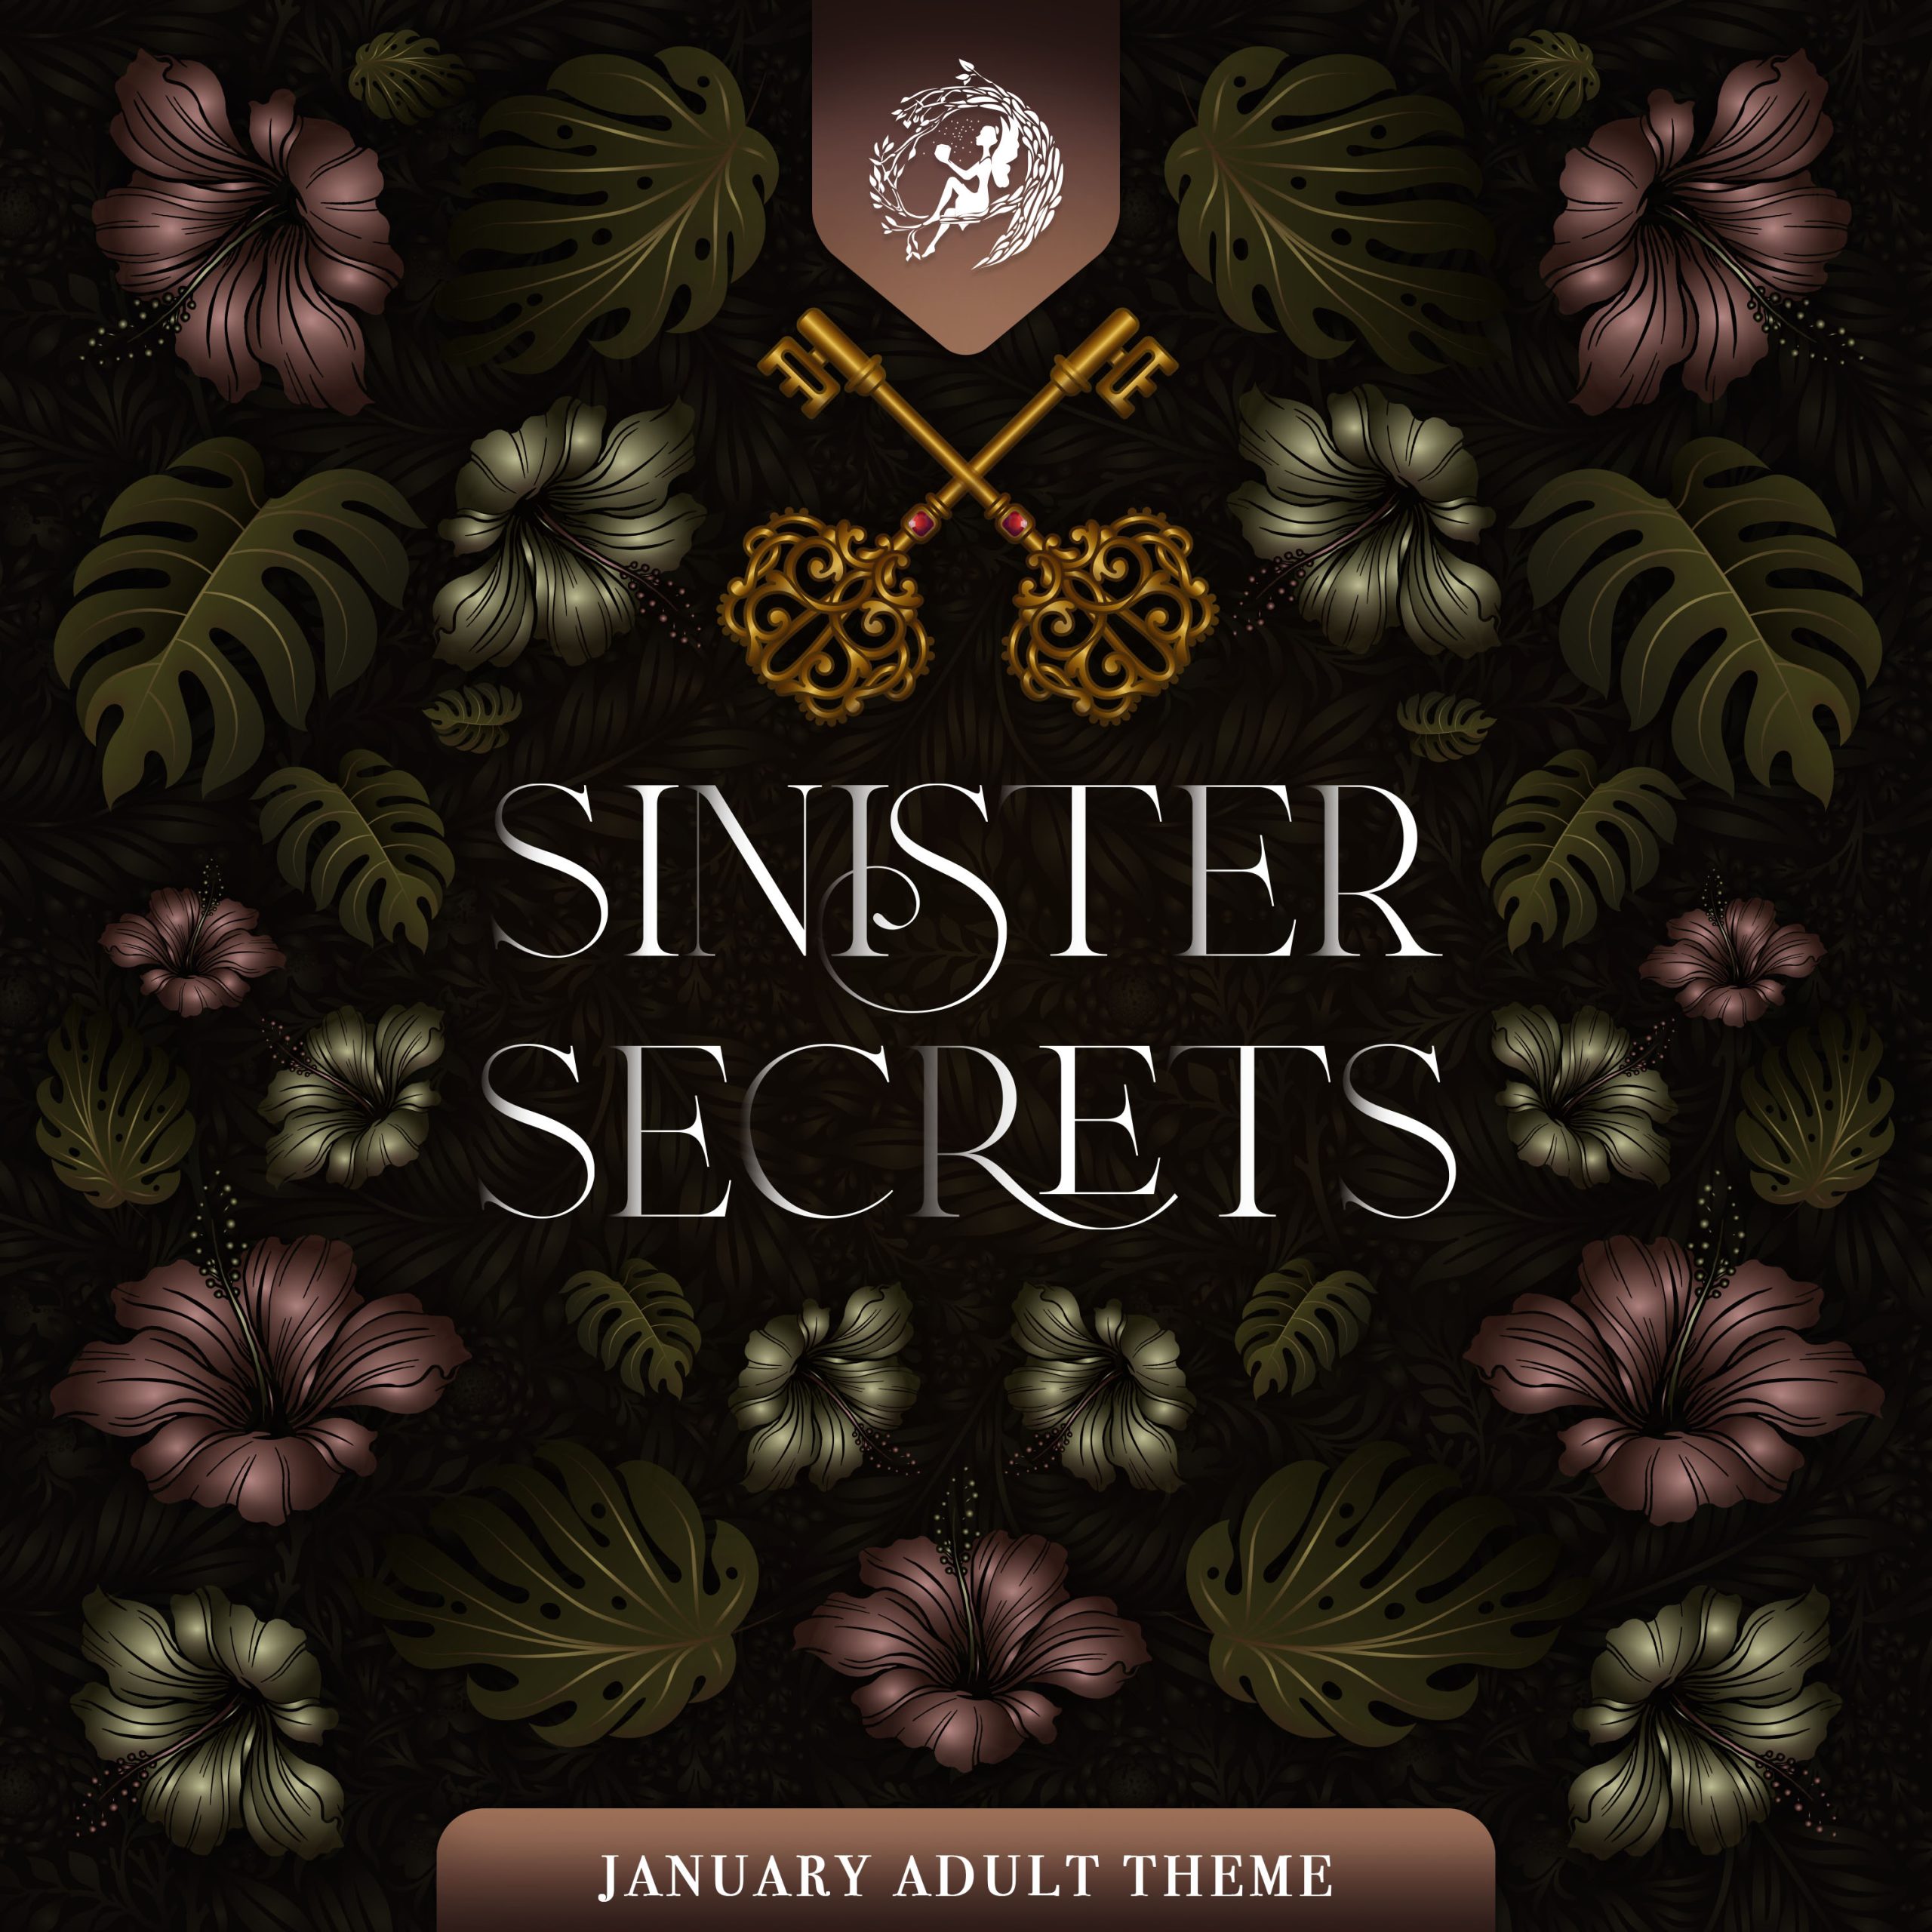 January Adult Theme: SINISTER SECRETS